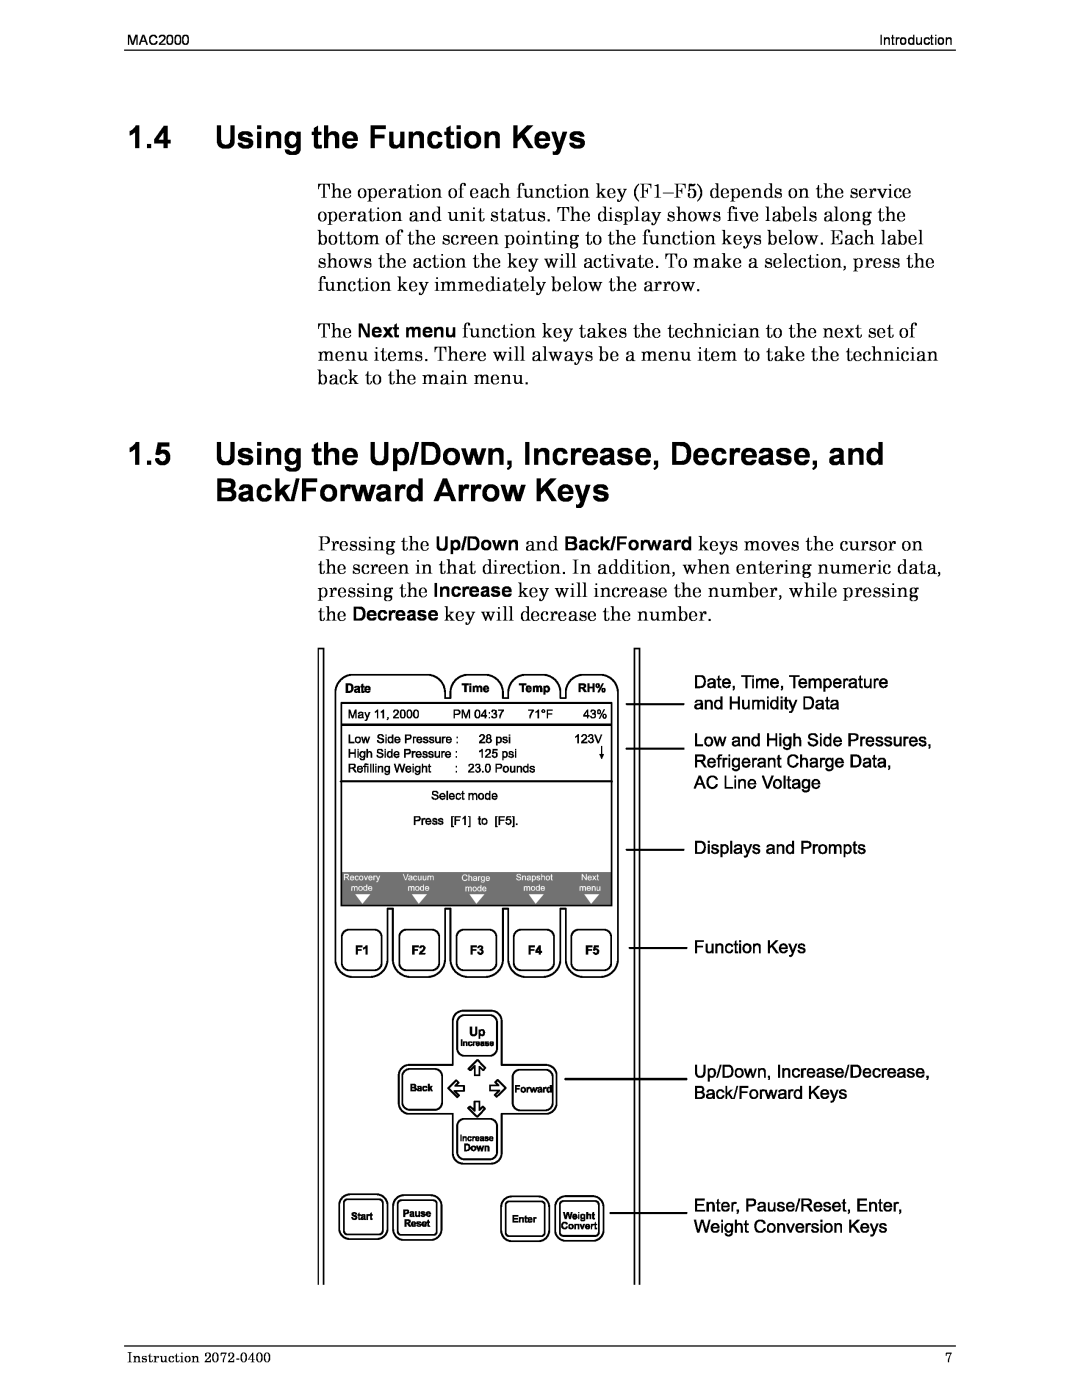 Bacharach 2072-0400 manual 1.4Using the Function Keys, Instruction 